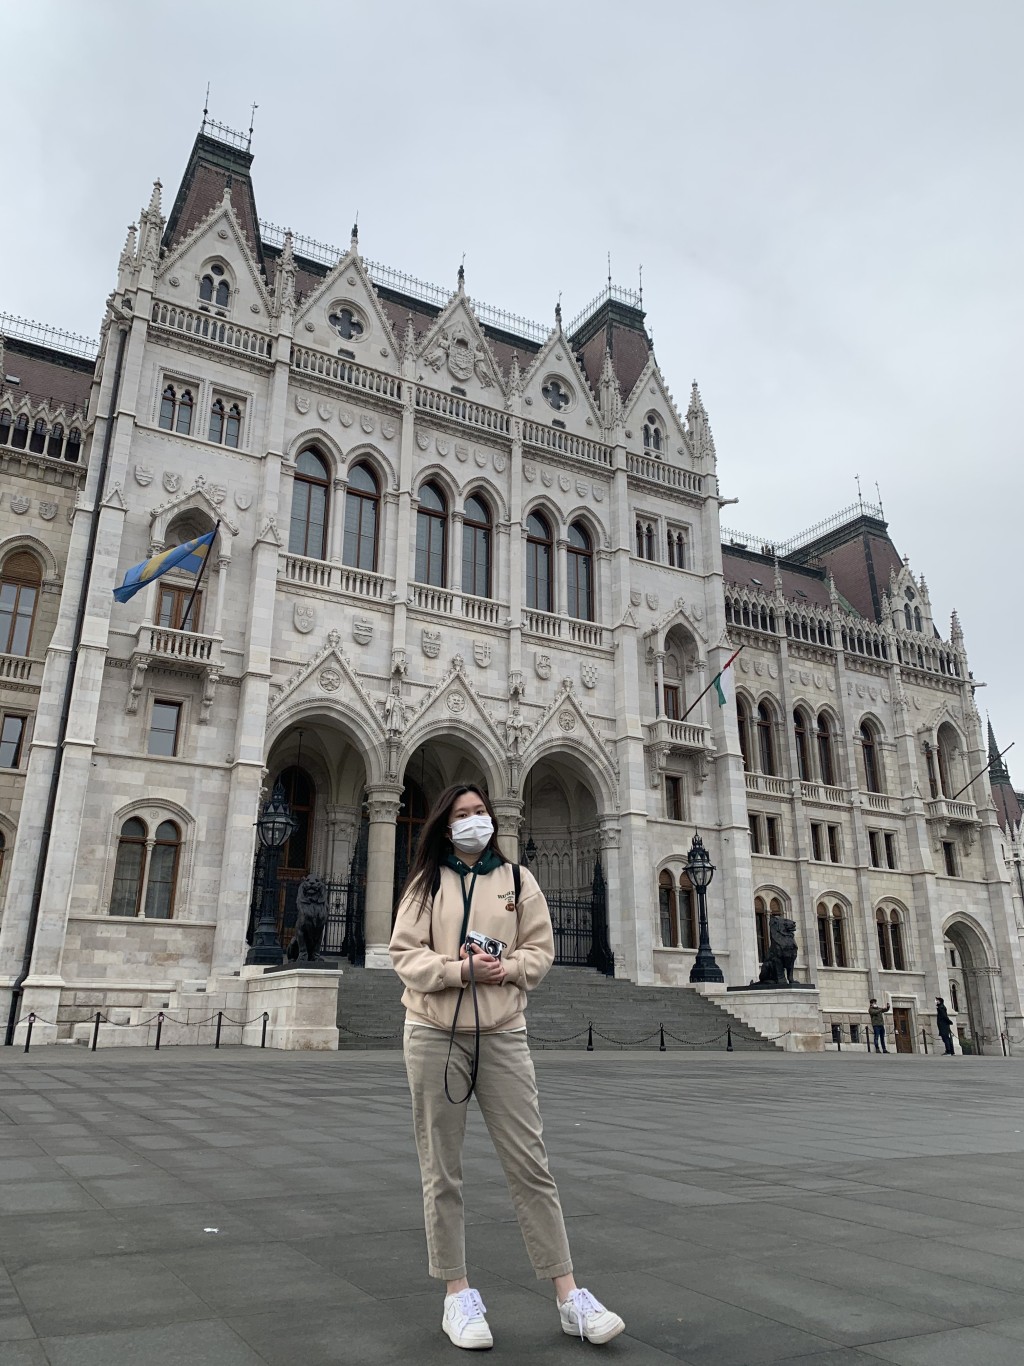 Anna喜歡到匈牙利 大城市欣賞不同特色建築。